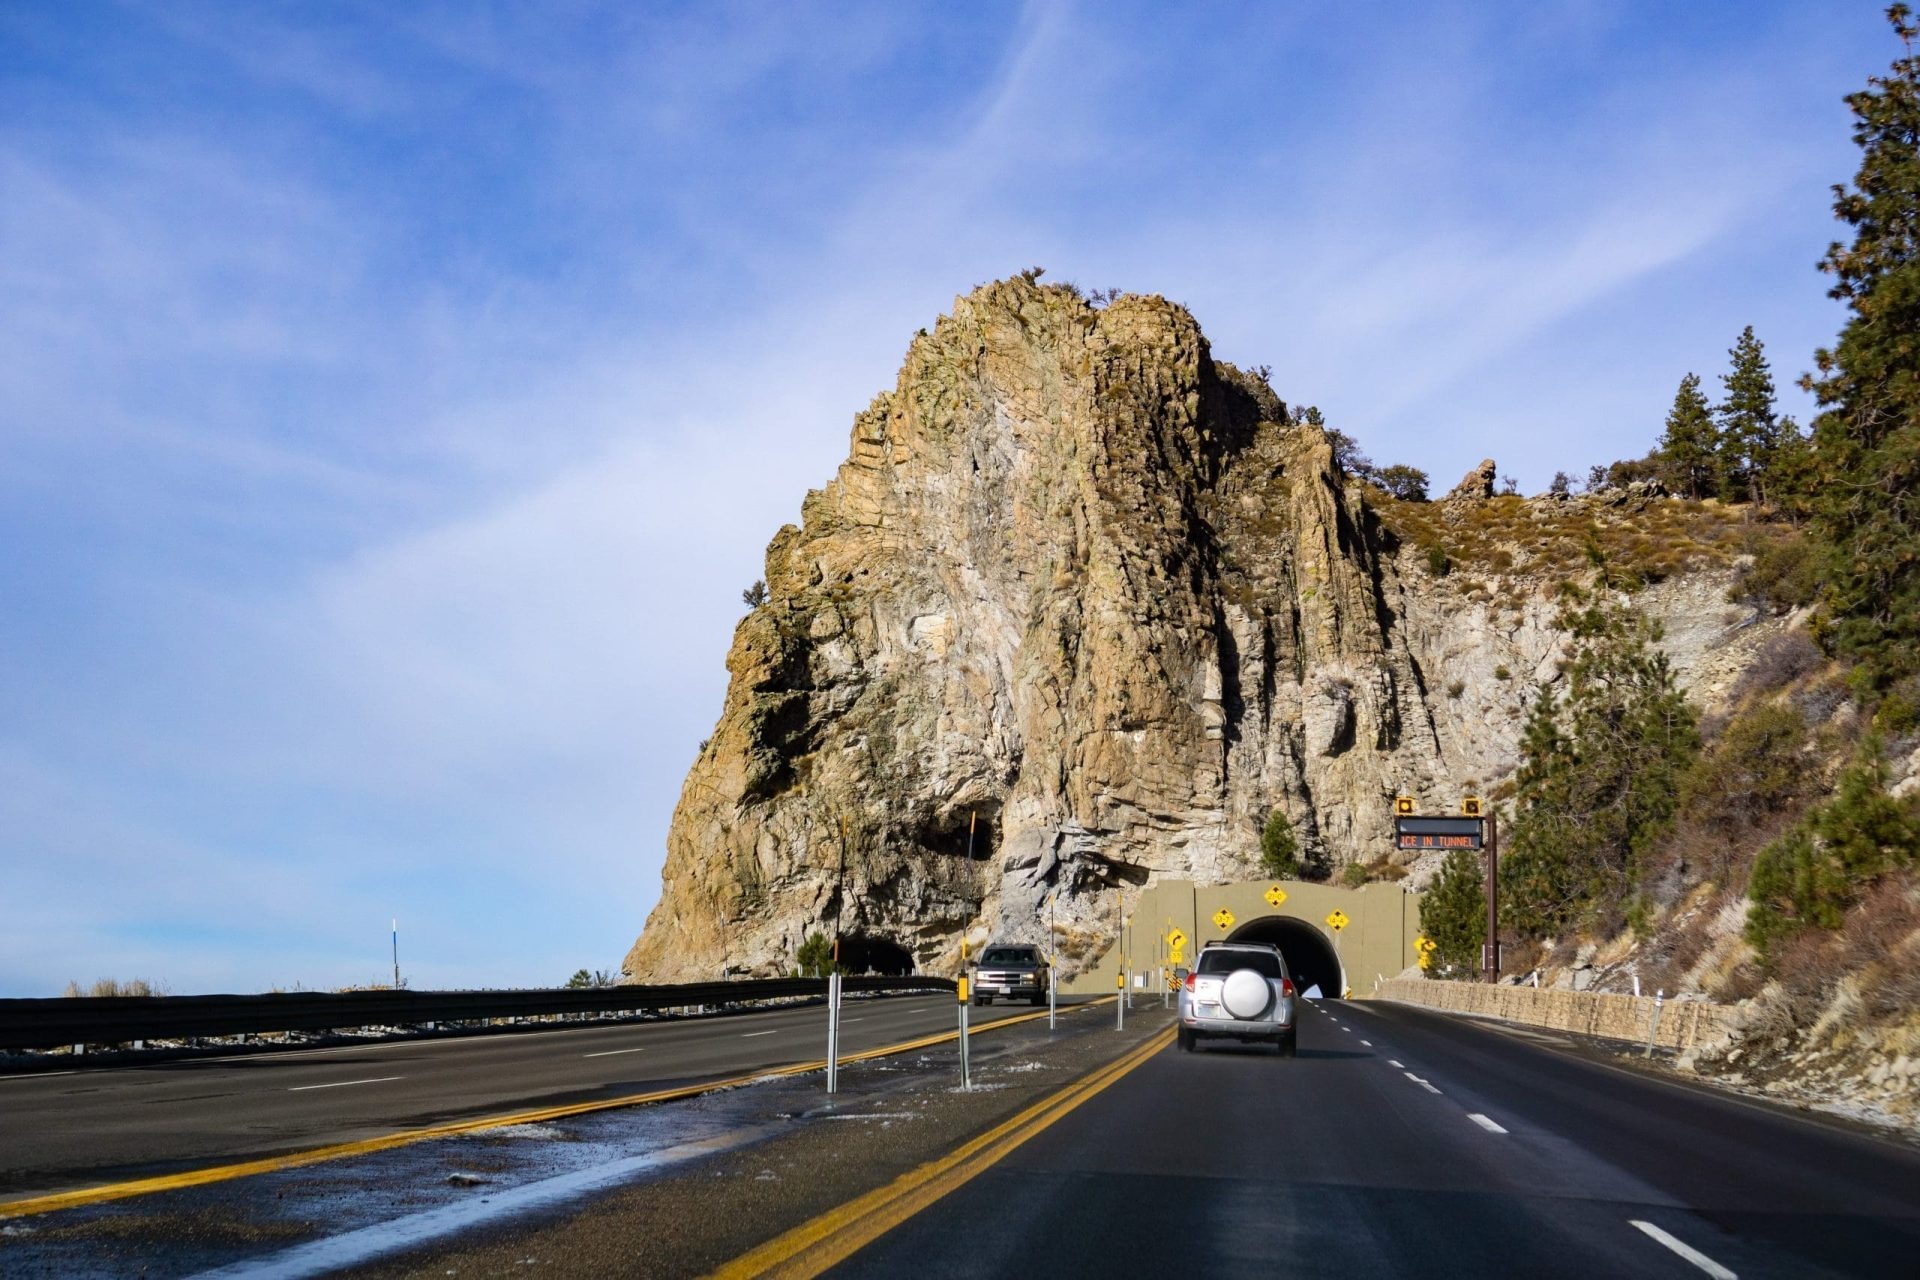 Ultimate Lake Tahoe Self-Guided Driving Tour